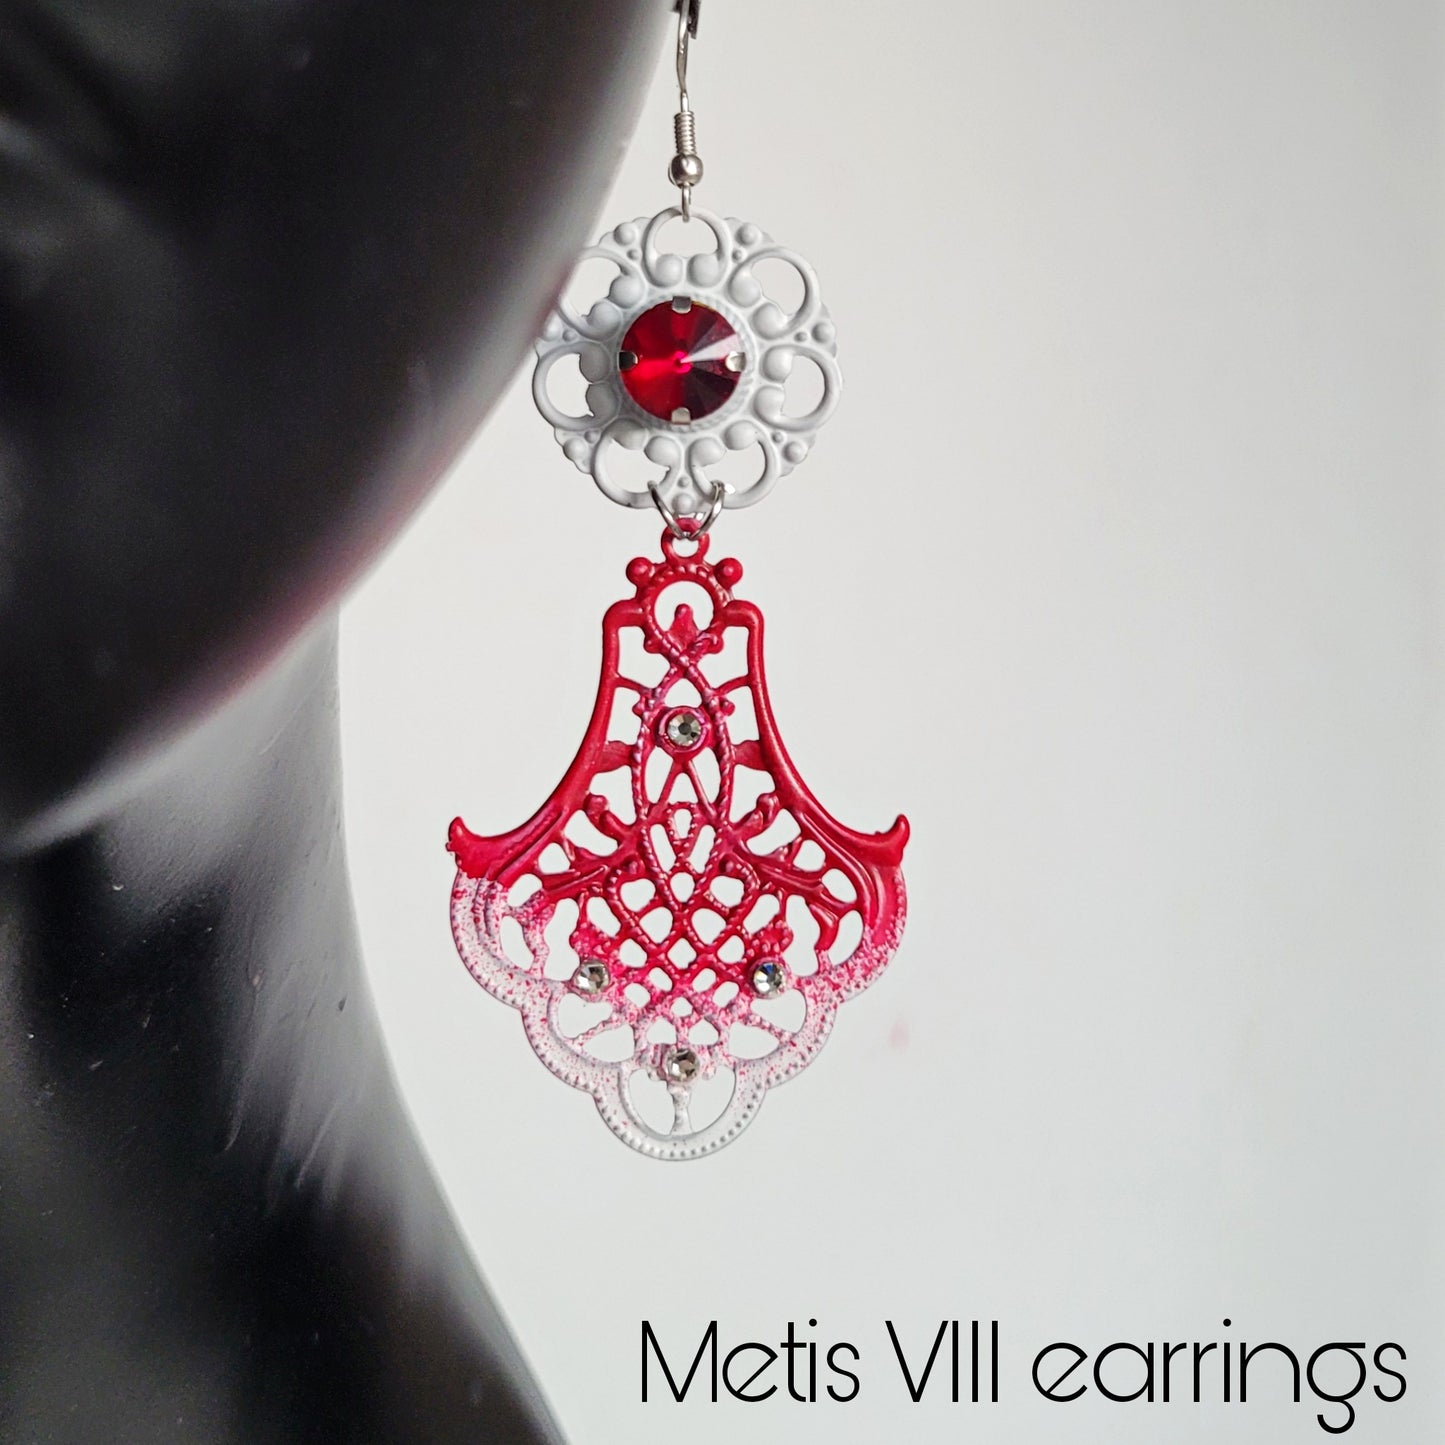 Deusa ex Machina collection: The Metis earrings